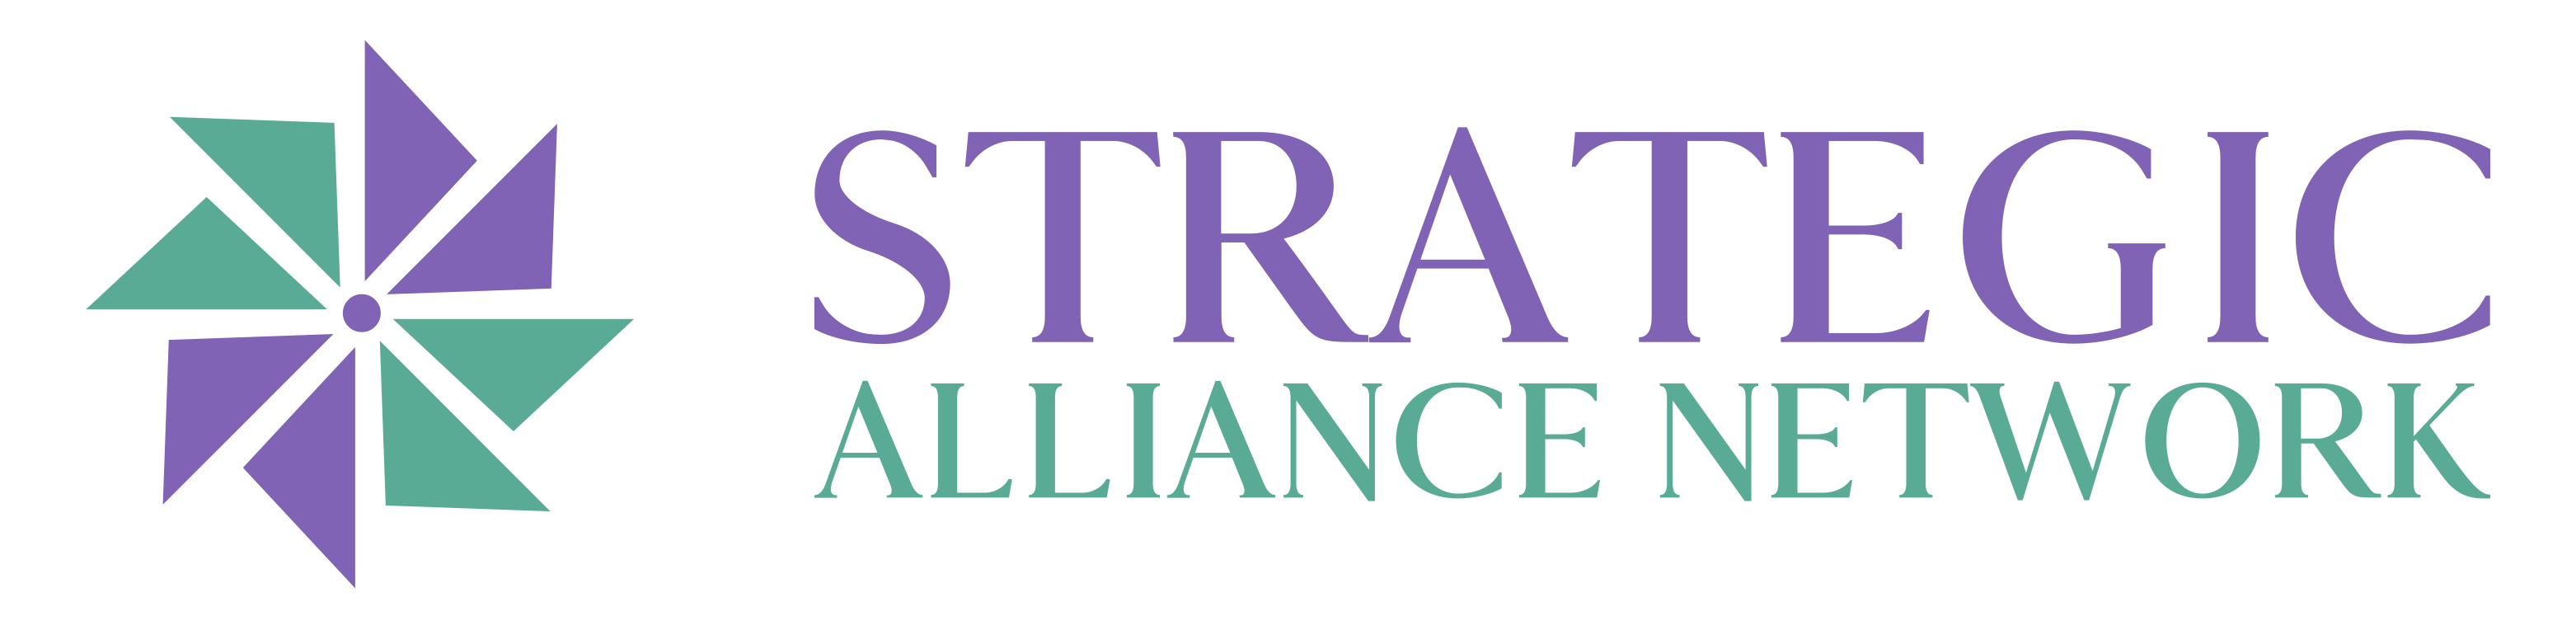 Strategic Alliance Network